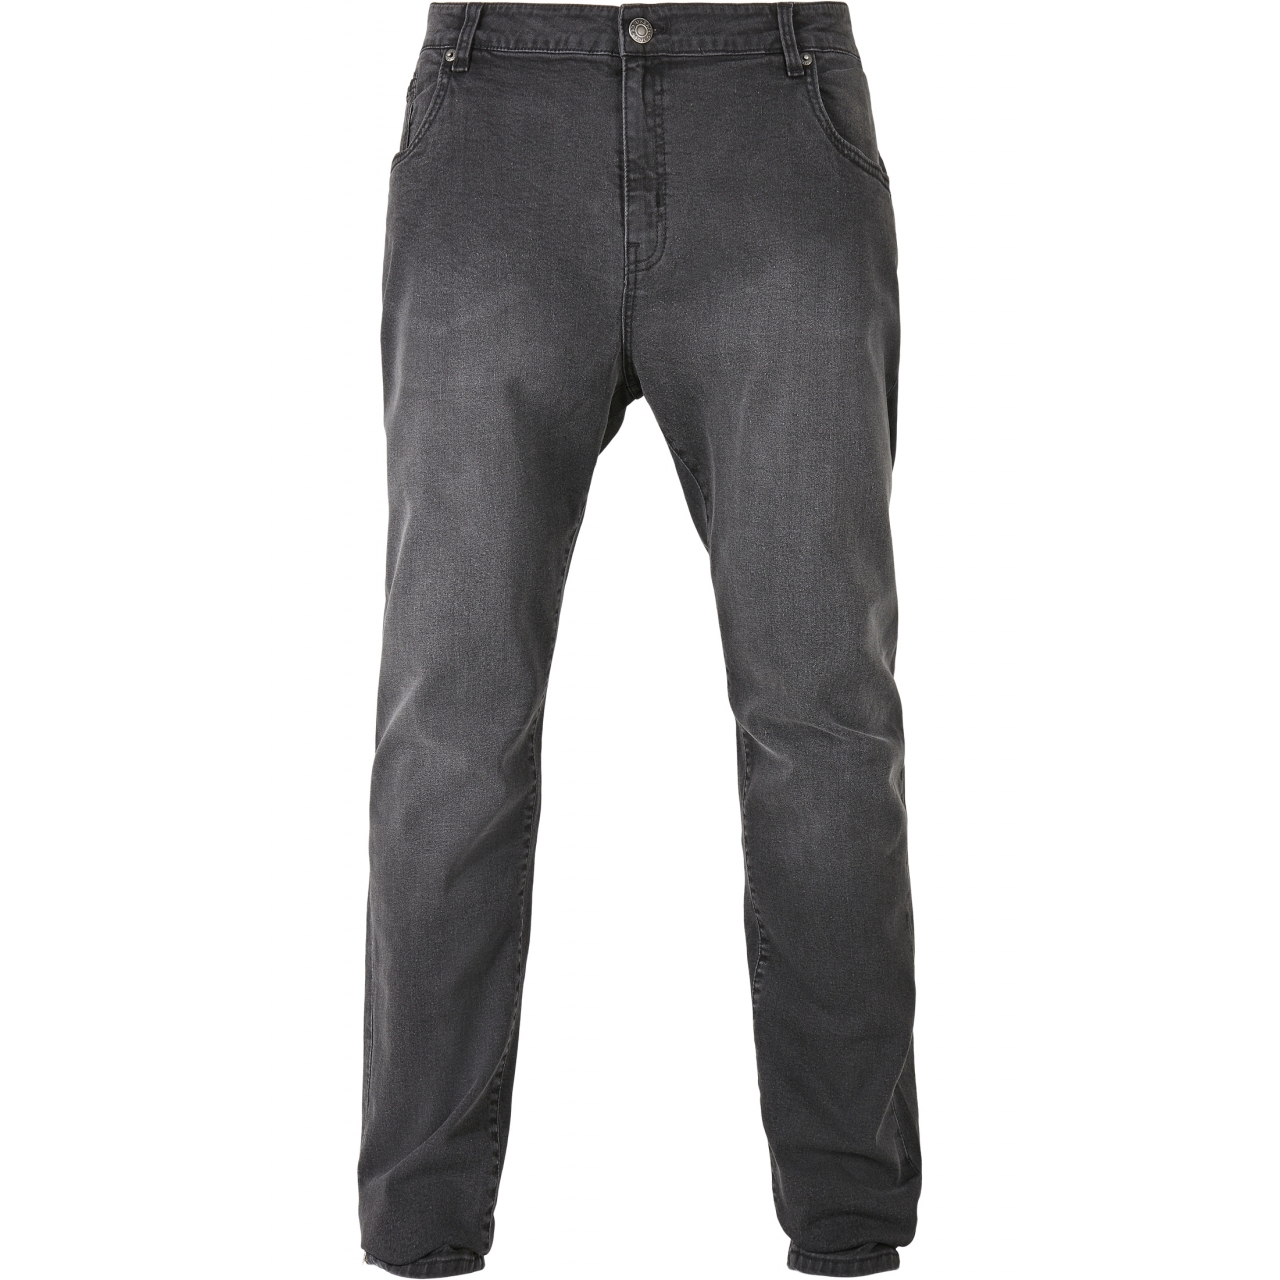 Džíny Urban Classics Slim Fit Zip Jeans - černé, 31/32